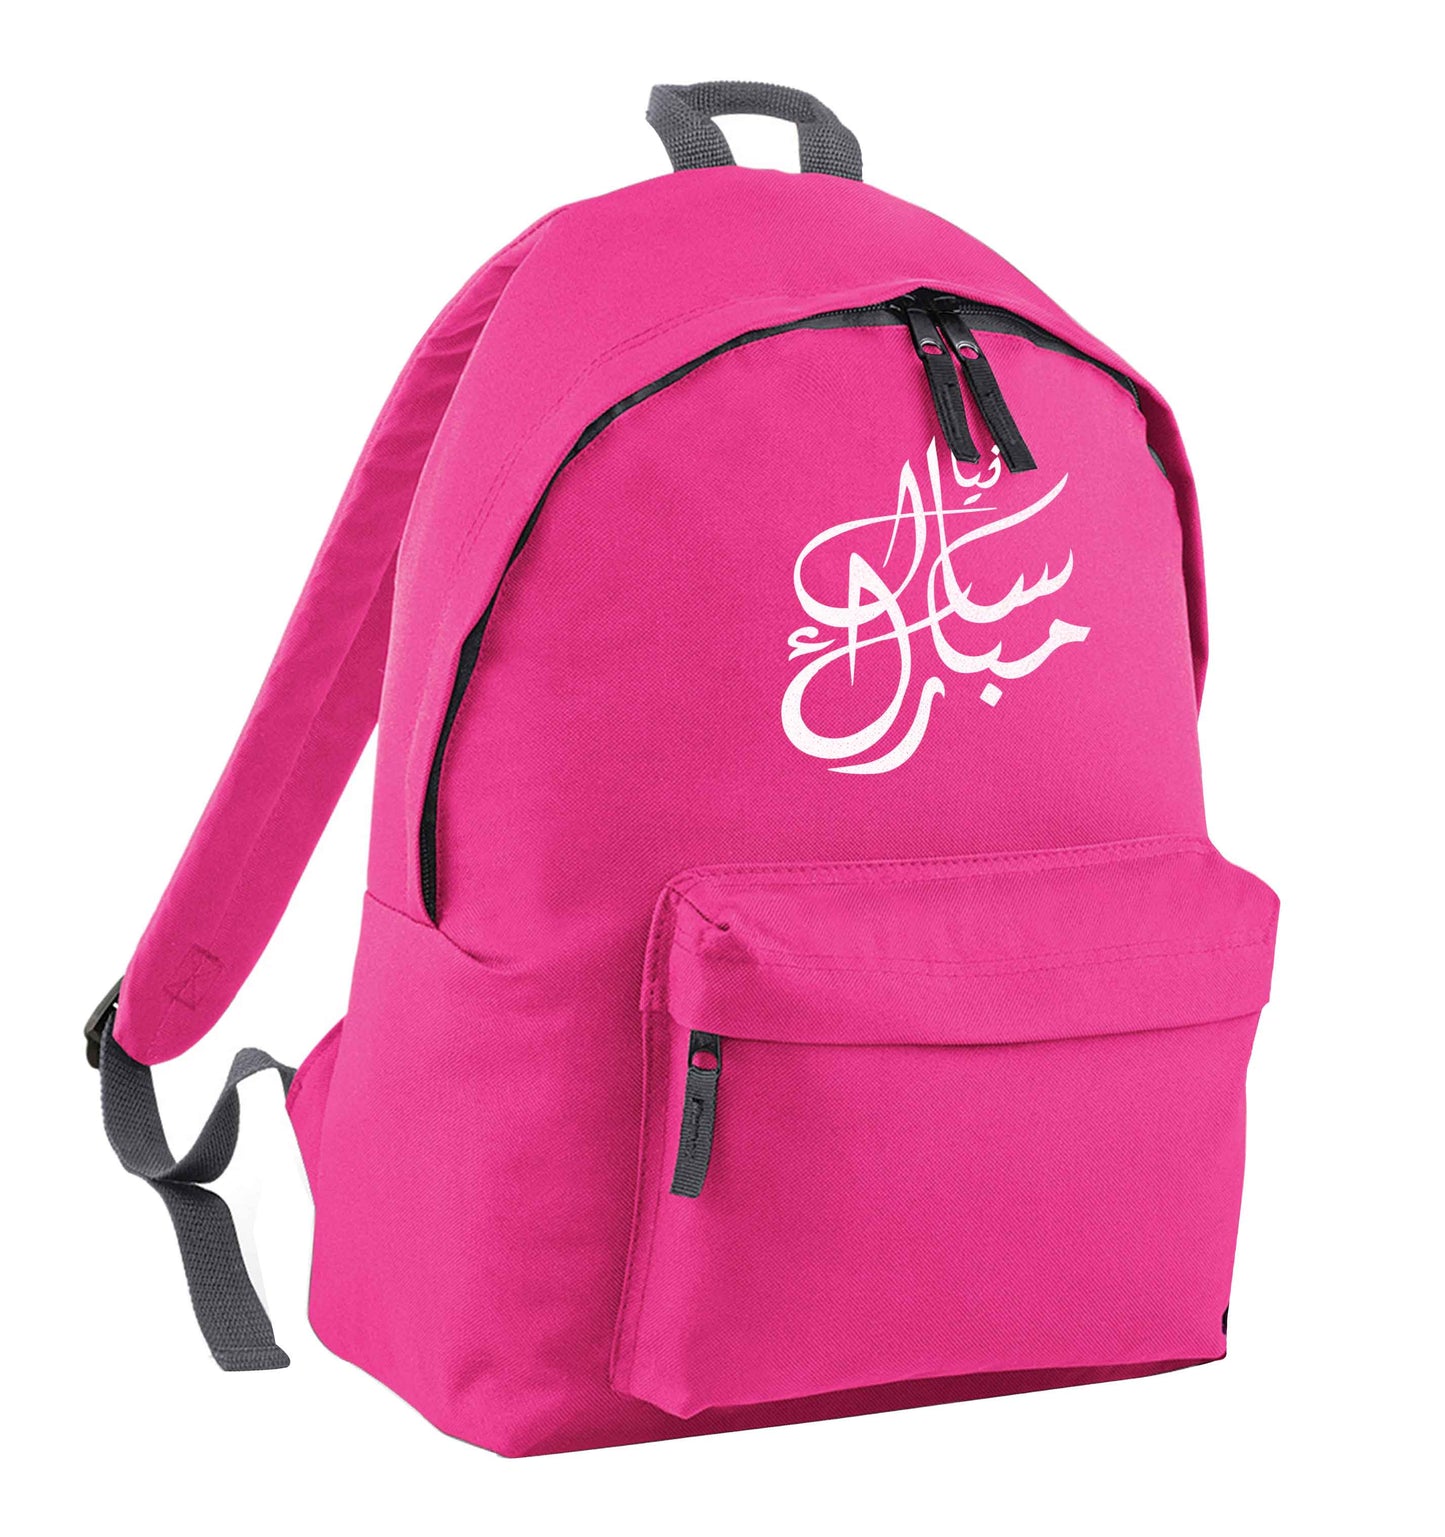 Urdu Naya saal mubarak pink children's backpack